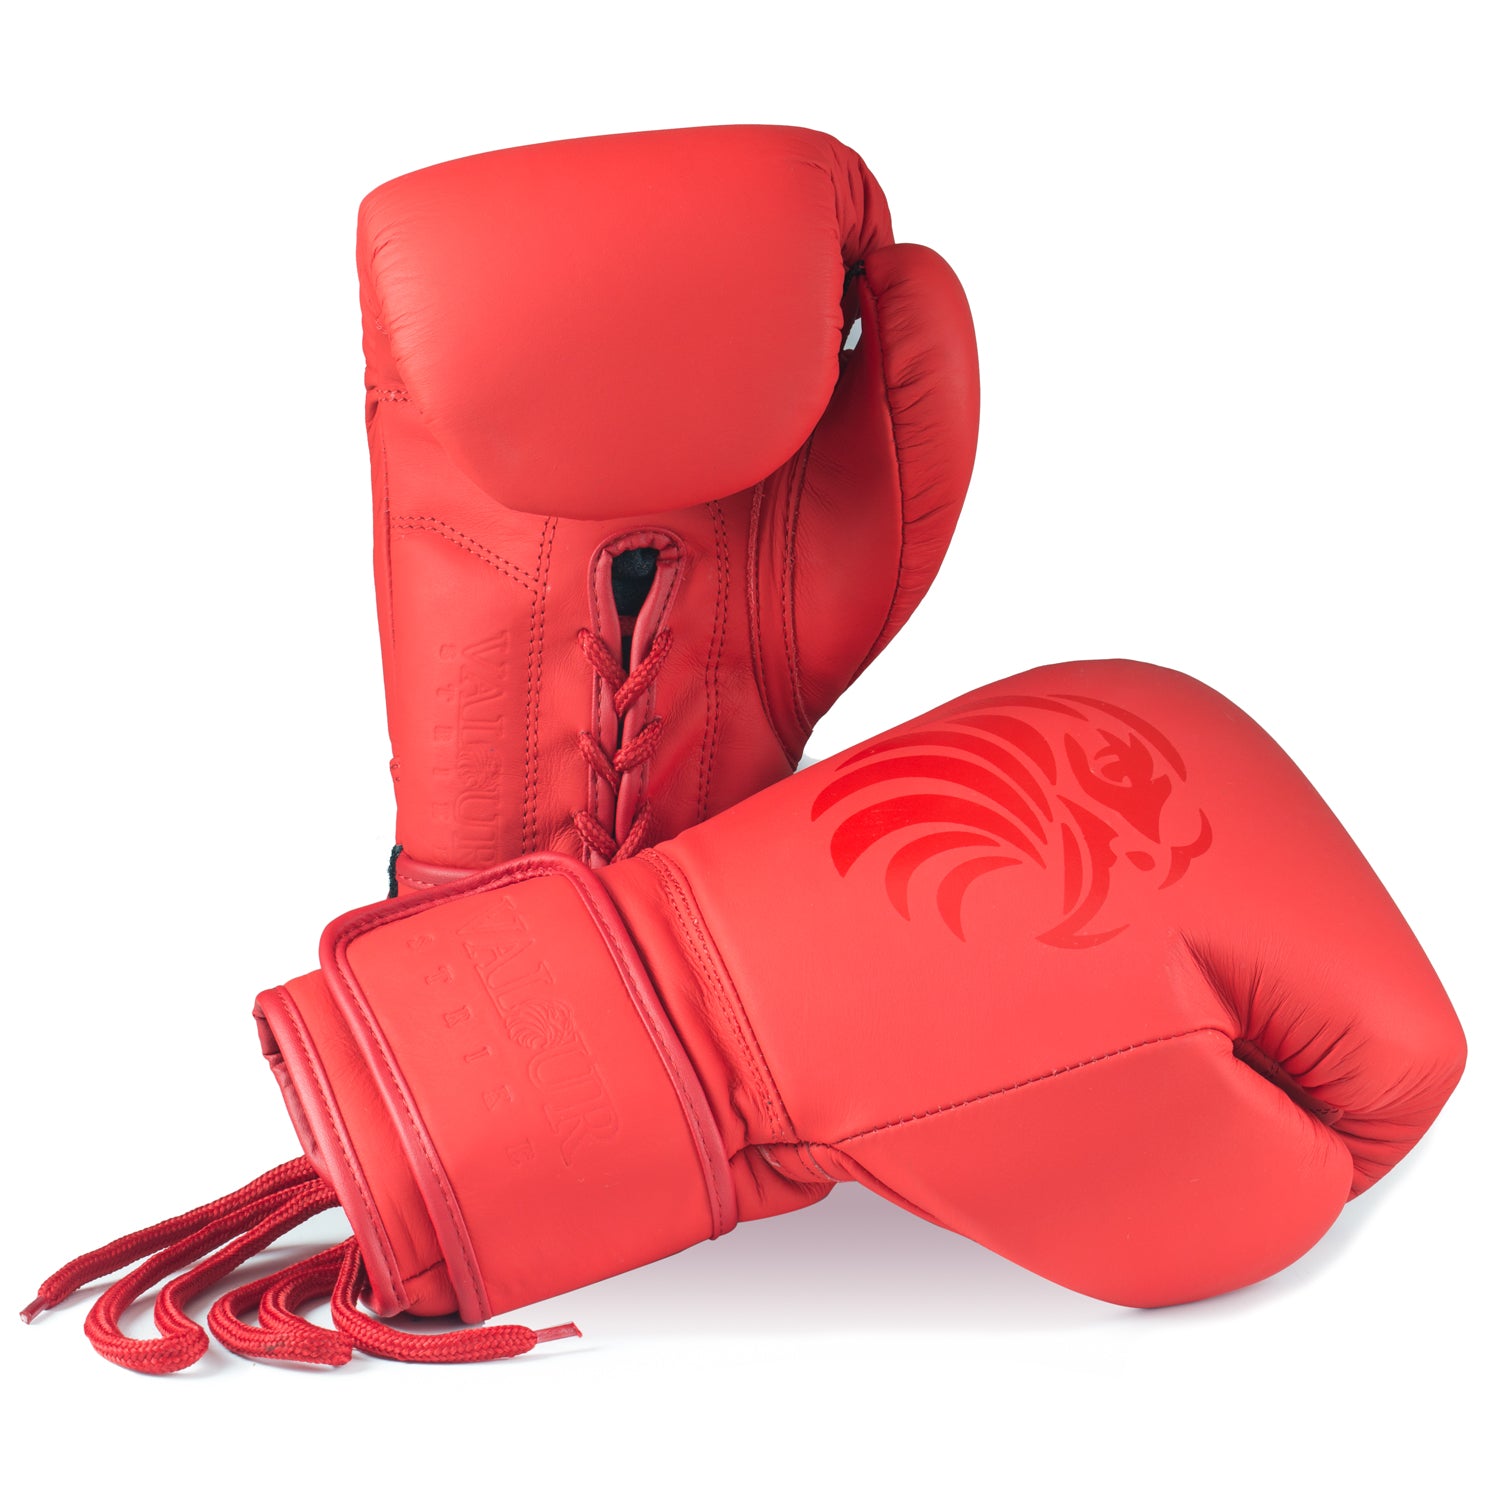 Pro “Fire Fists” Boxing Gloves (Lace Up Hybrid) –